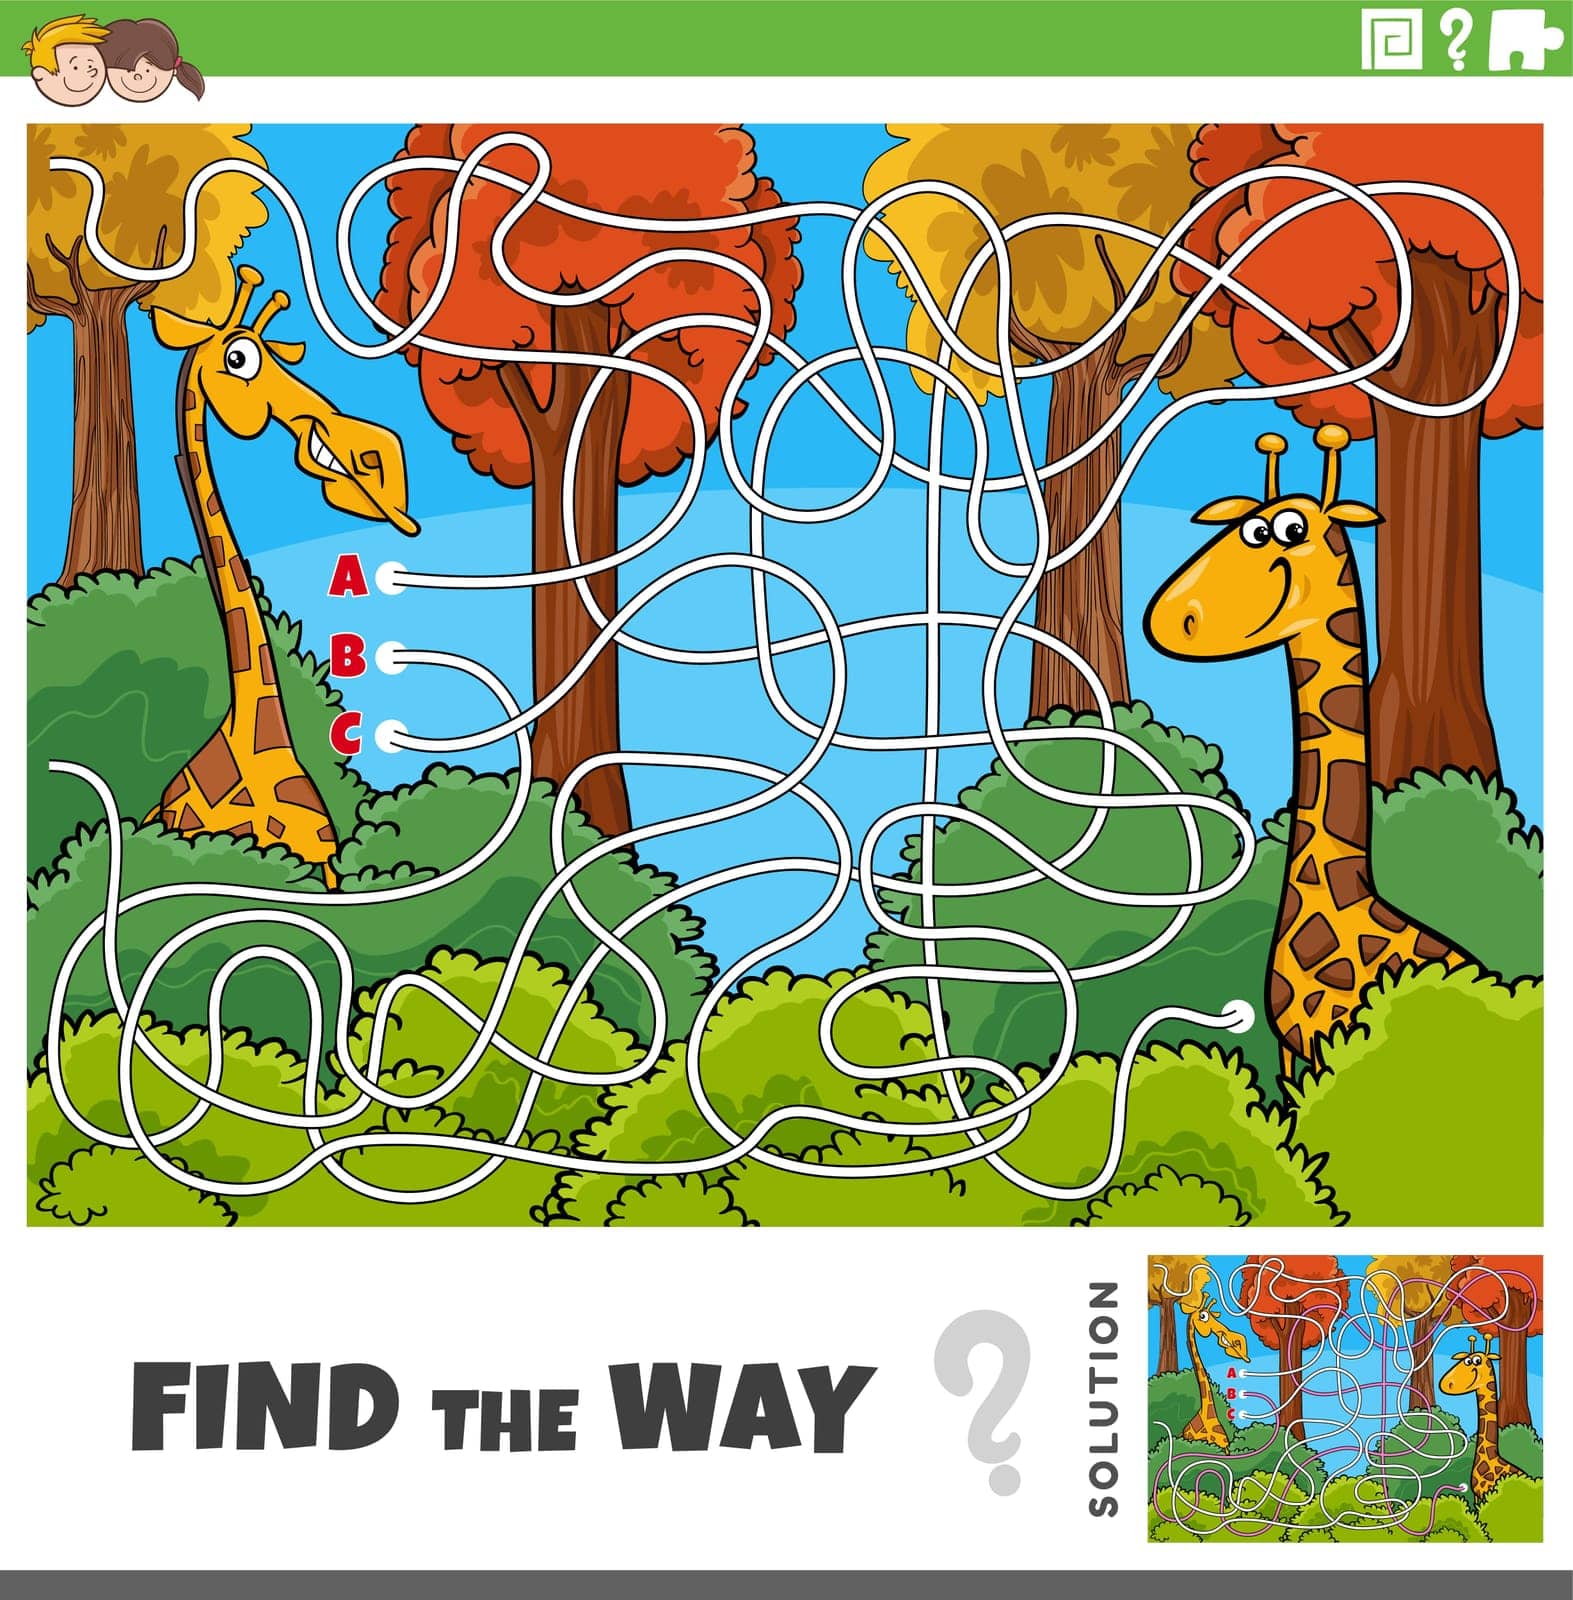 find the way maze game with cartoon giraffe characters by izakowski